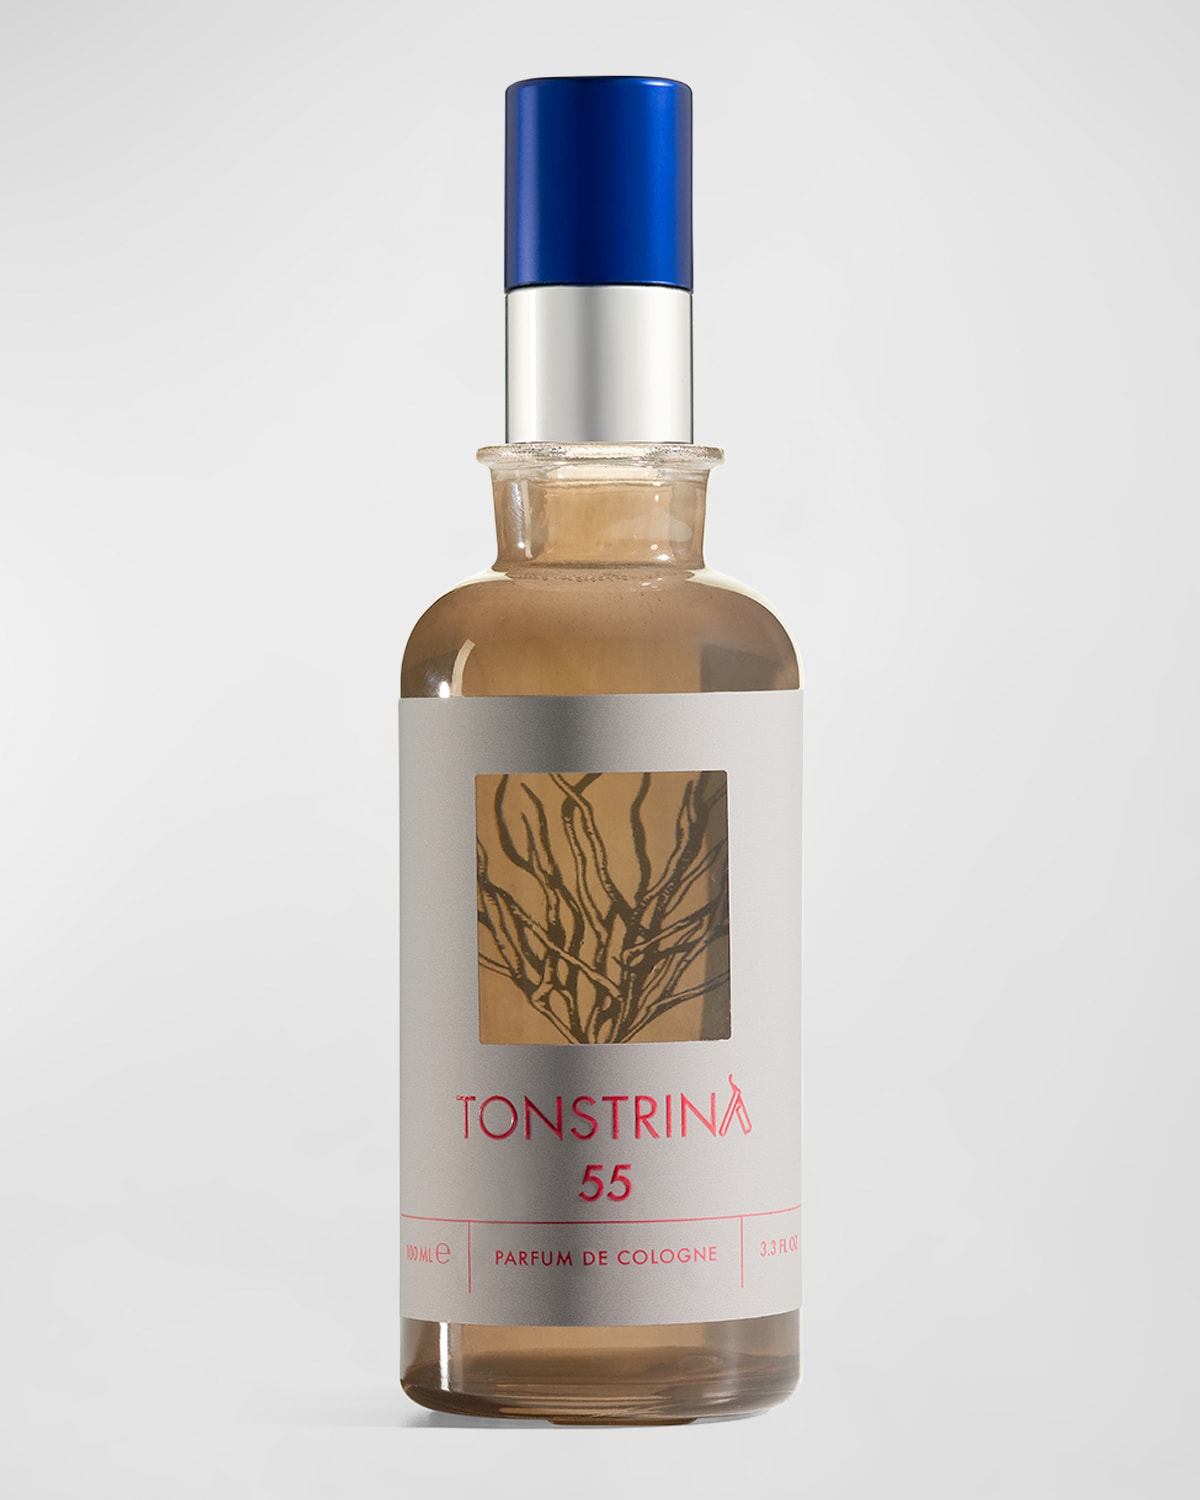 Tonstrina 55 Parfum de Cologne, 3.3 oz.